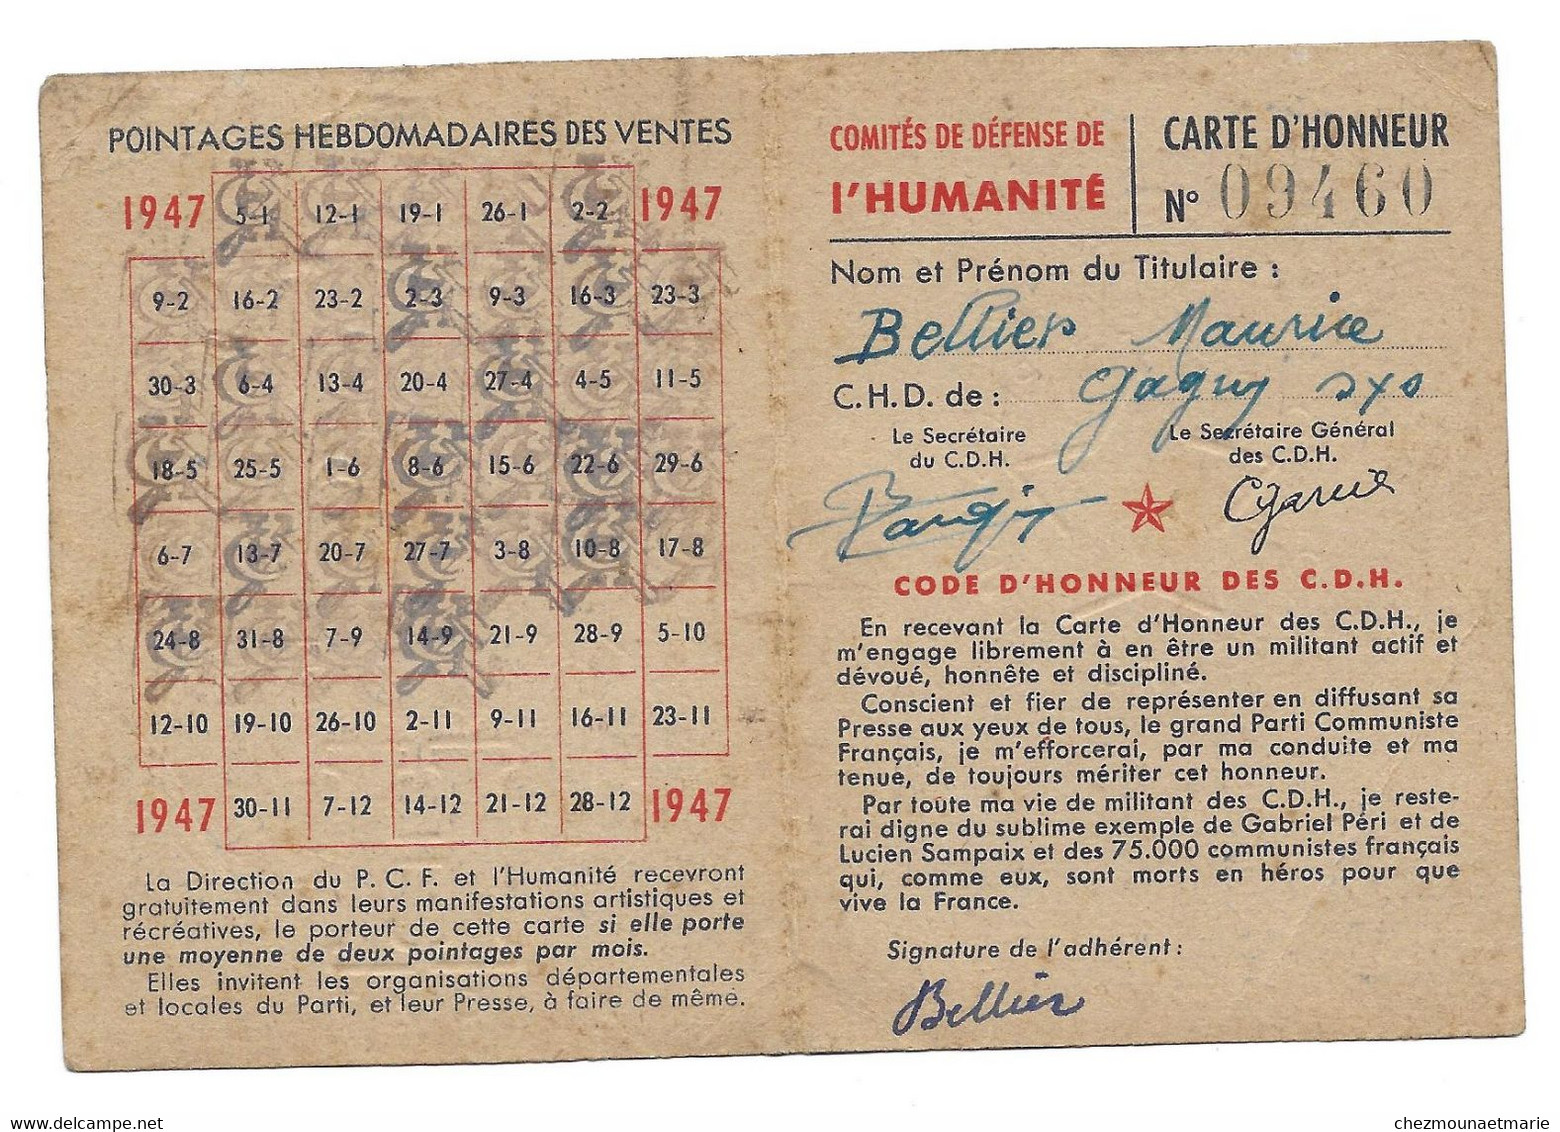 1947 GAGNY COMITES DEFENSE HUMANITE CHD CARTE D HONNEUR BELLIER MAURICE - Historical Documents